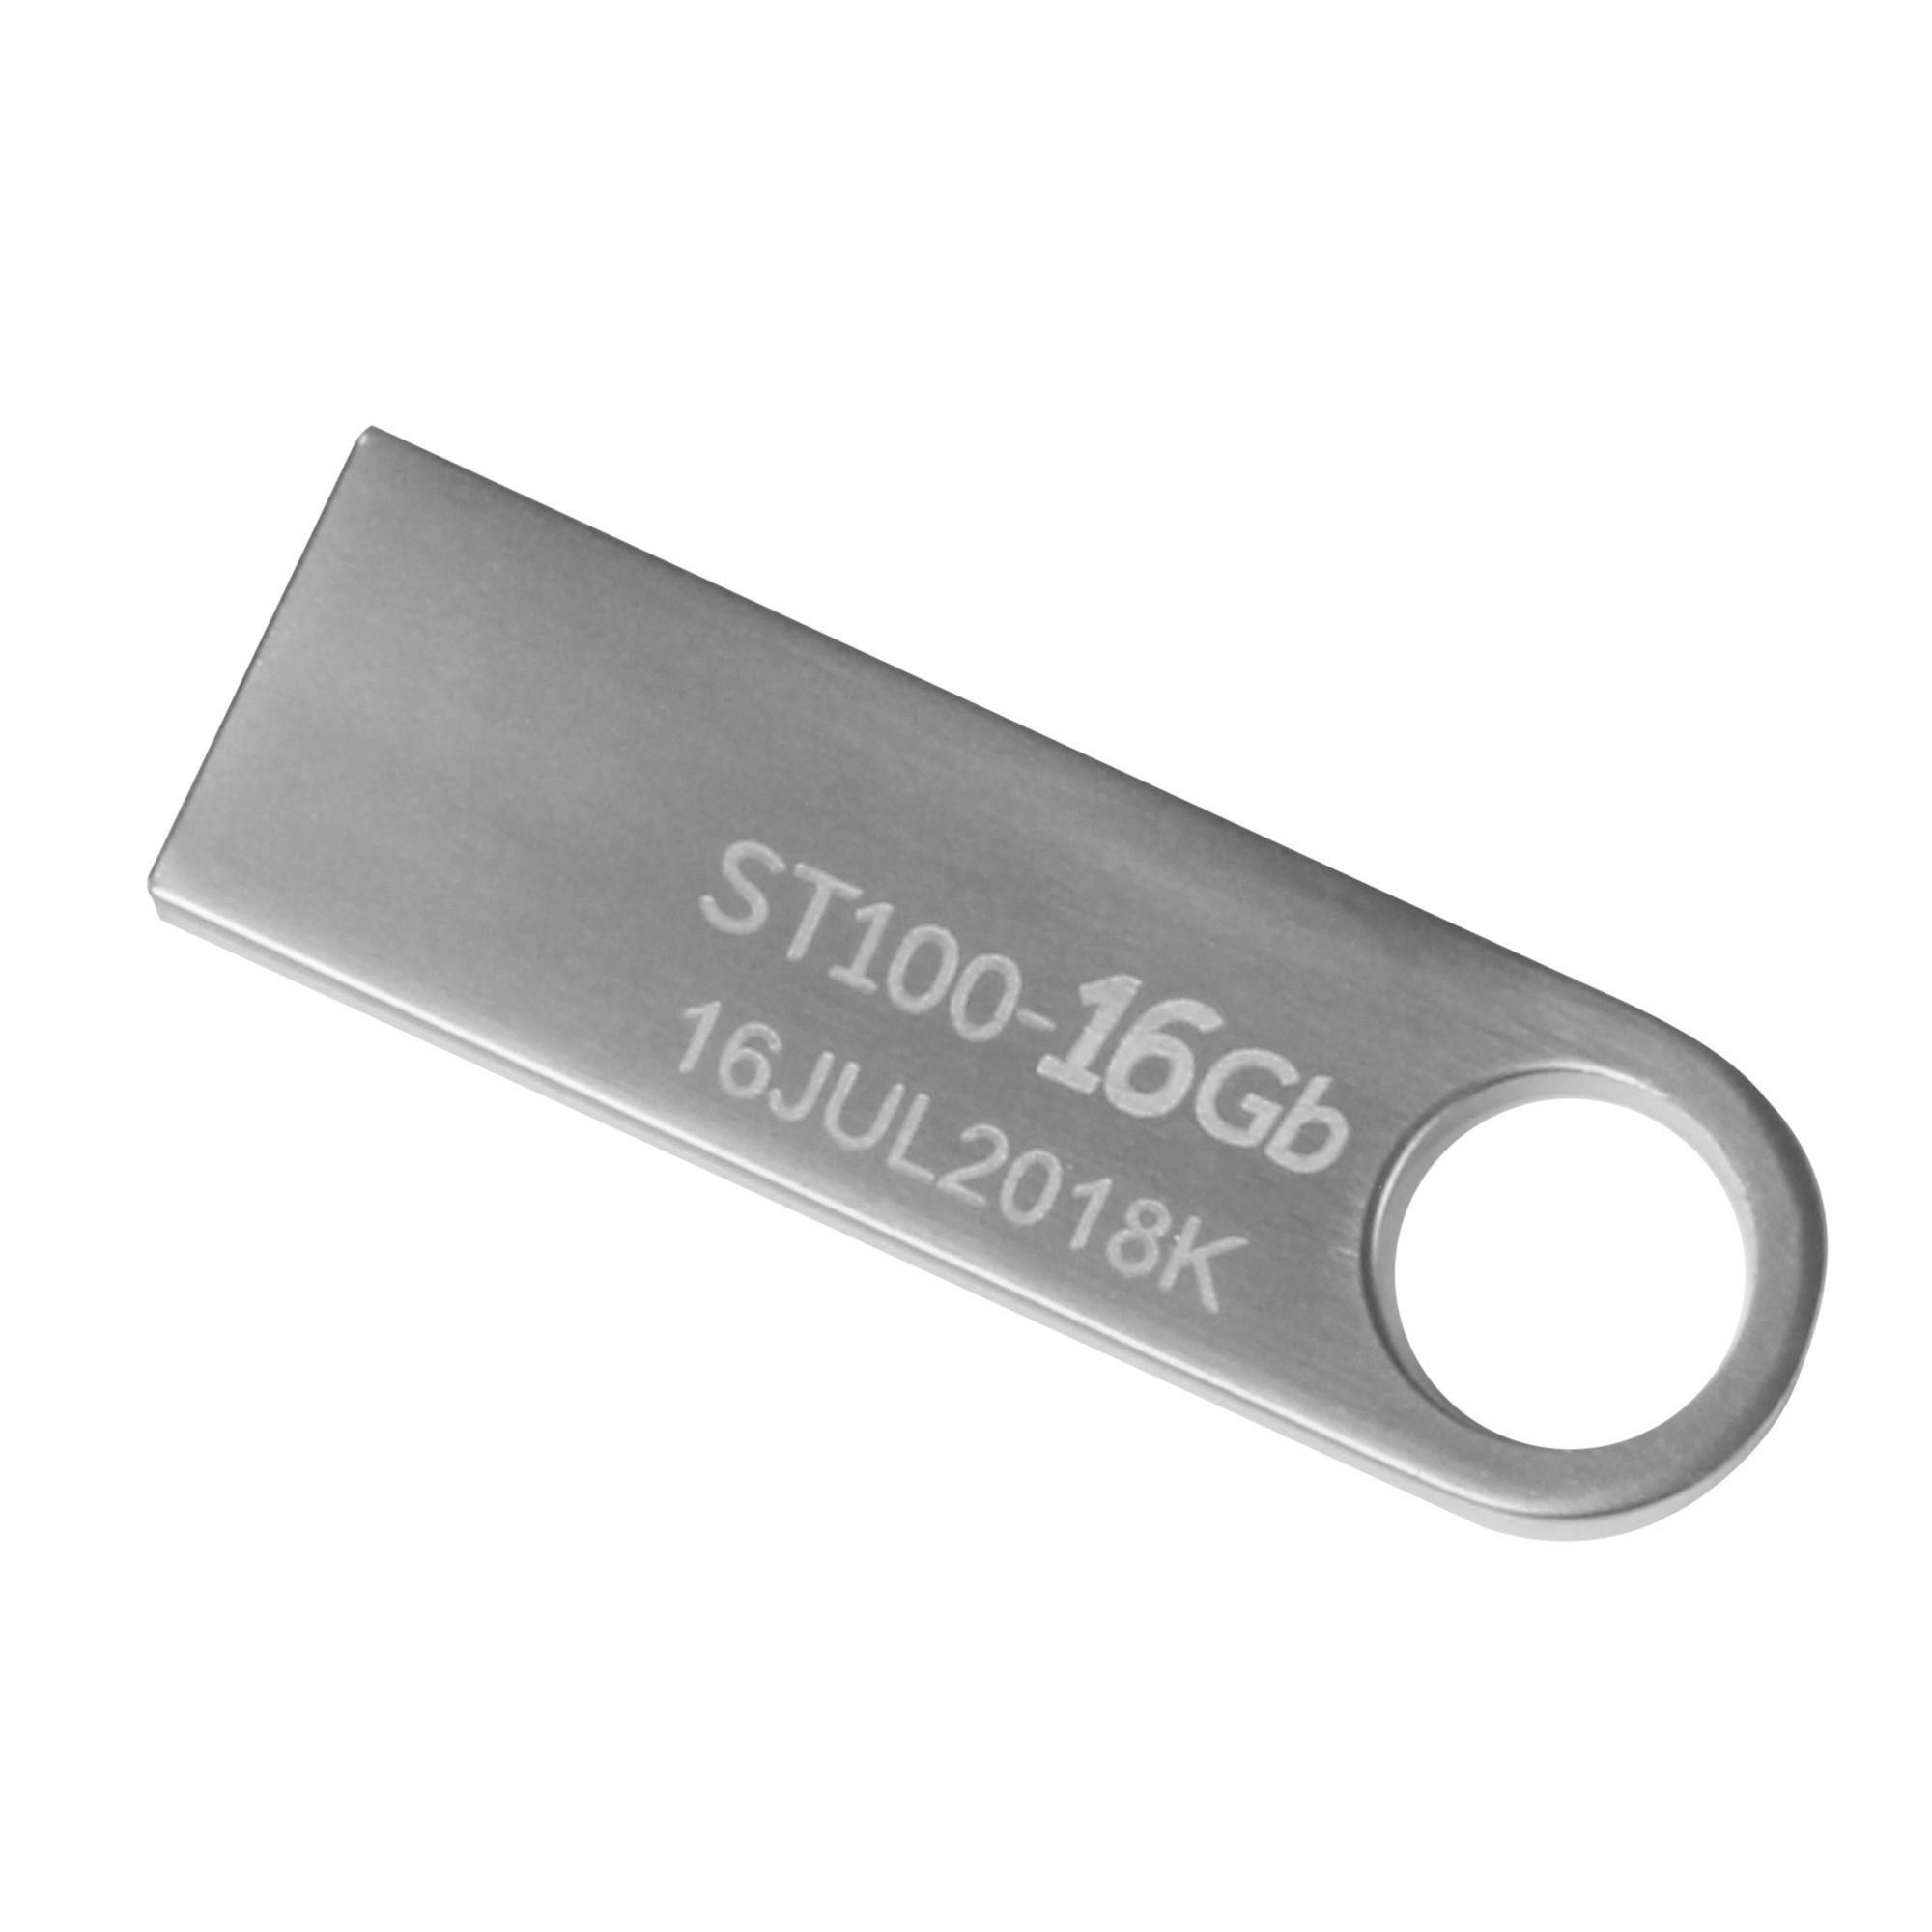 MEMORIA USB STYLOS 16 GB ST100 FLASH 2.0 PLATA STMUSB2B